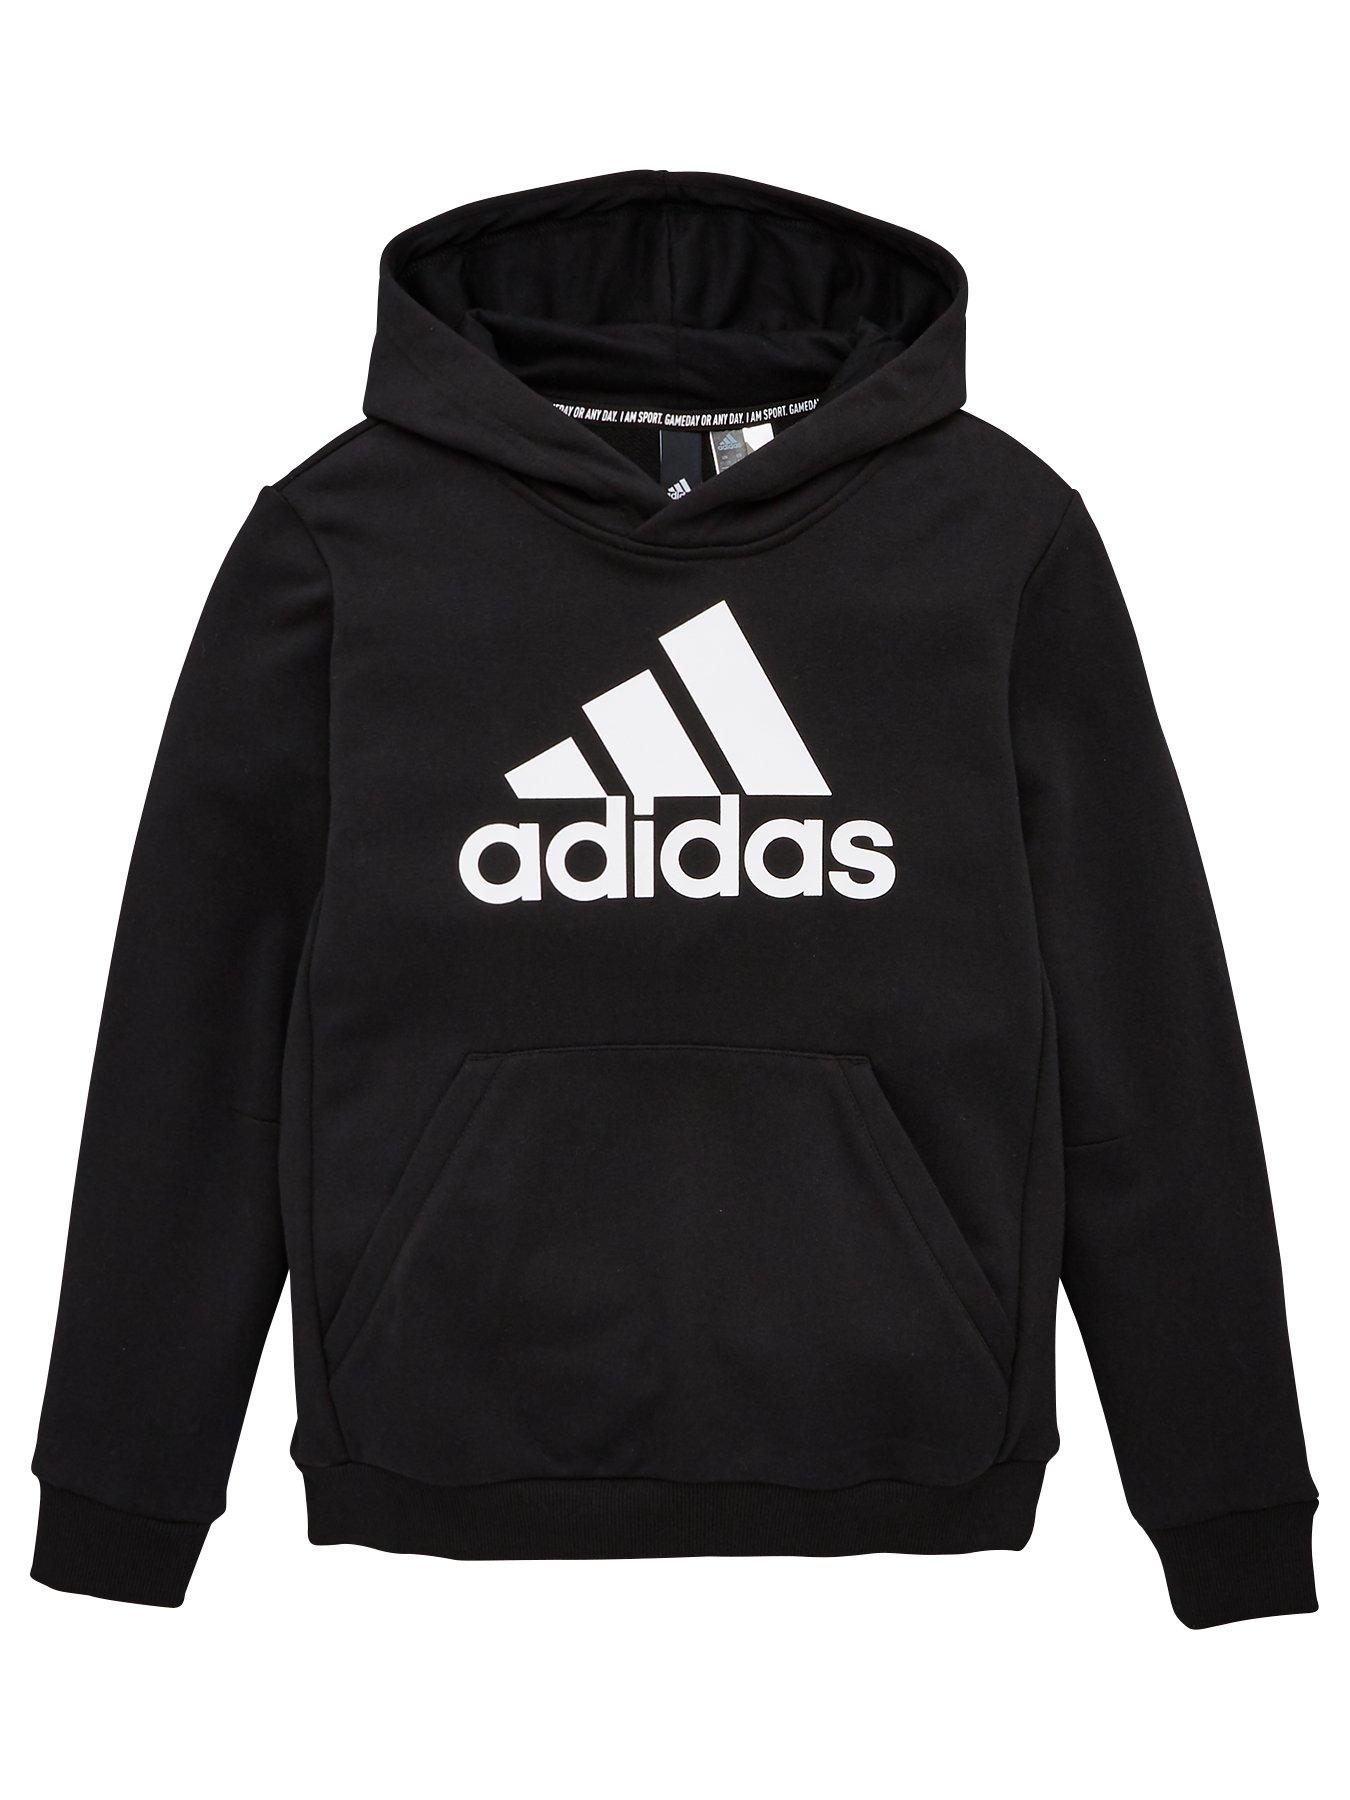 youth adidas hoodie